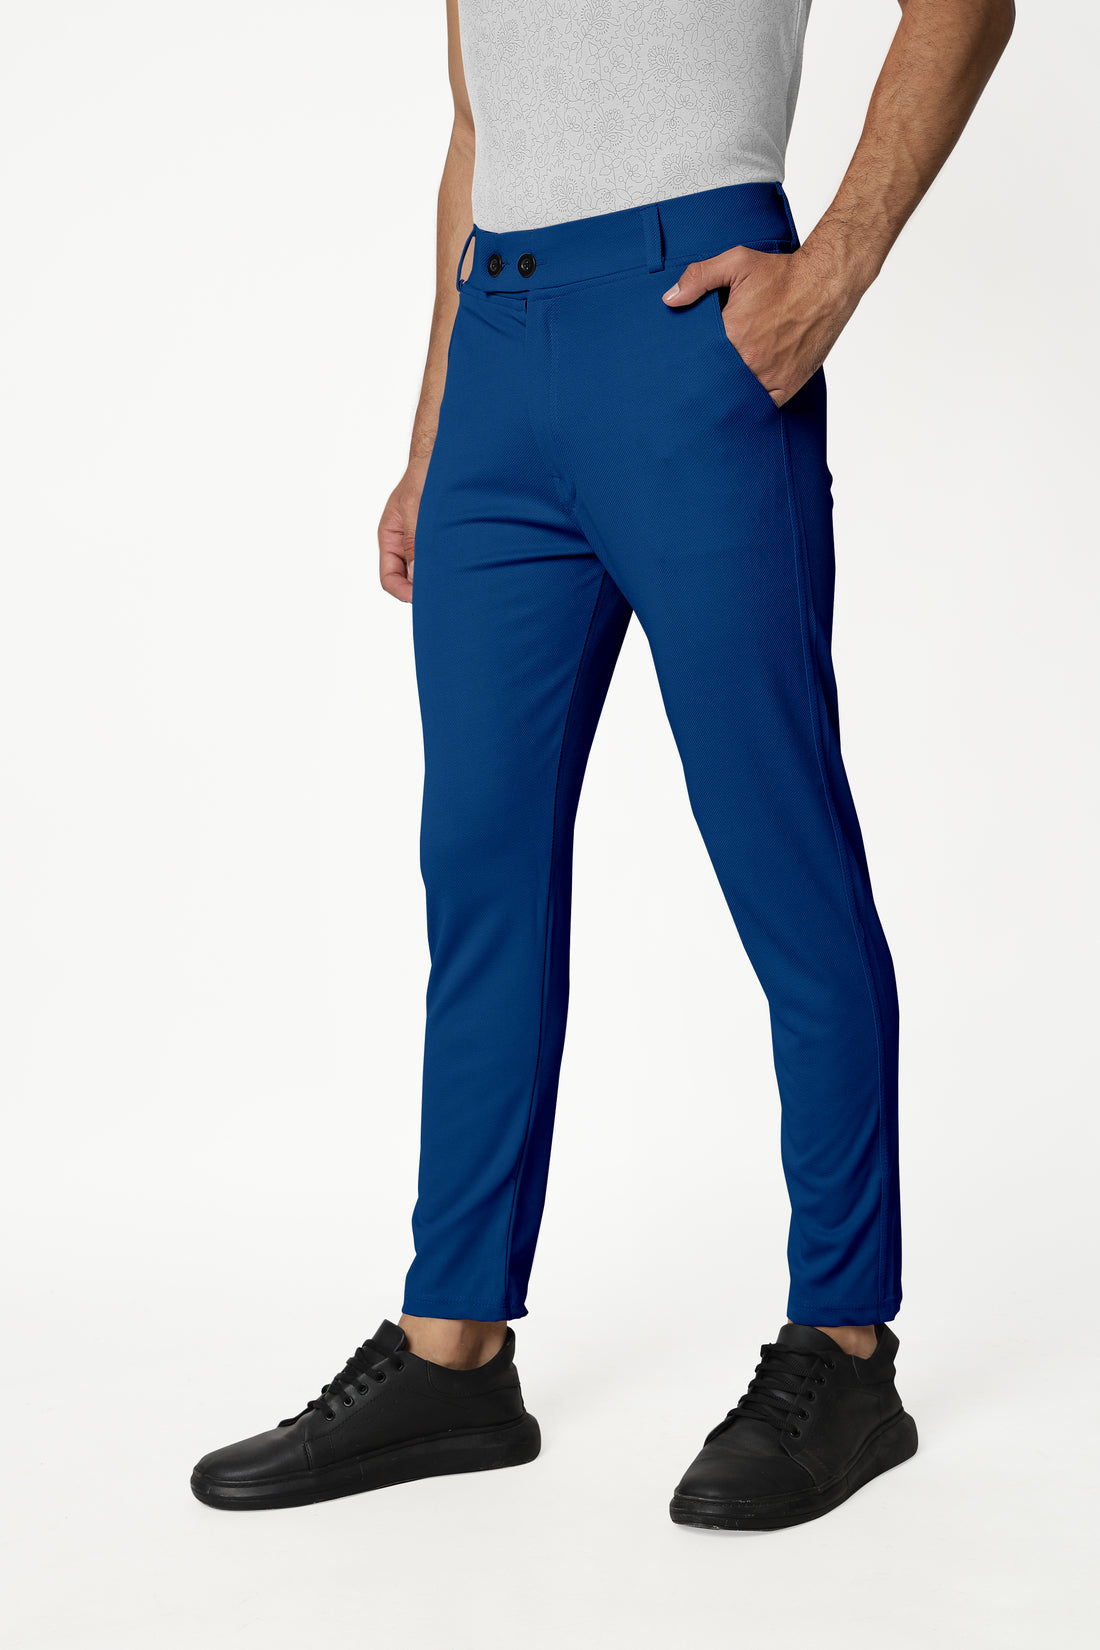 Teal Blue Lycra Stretchable Formal Slim Fit  Trouser Pant